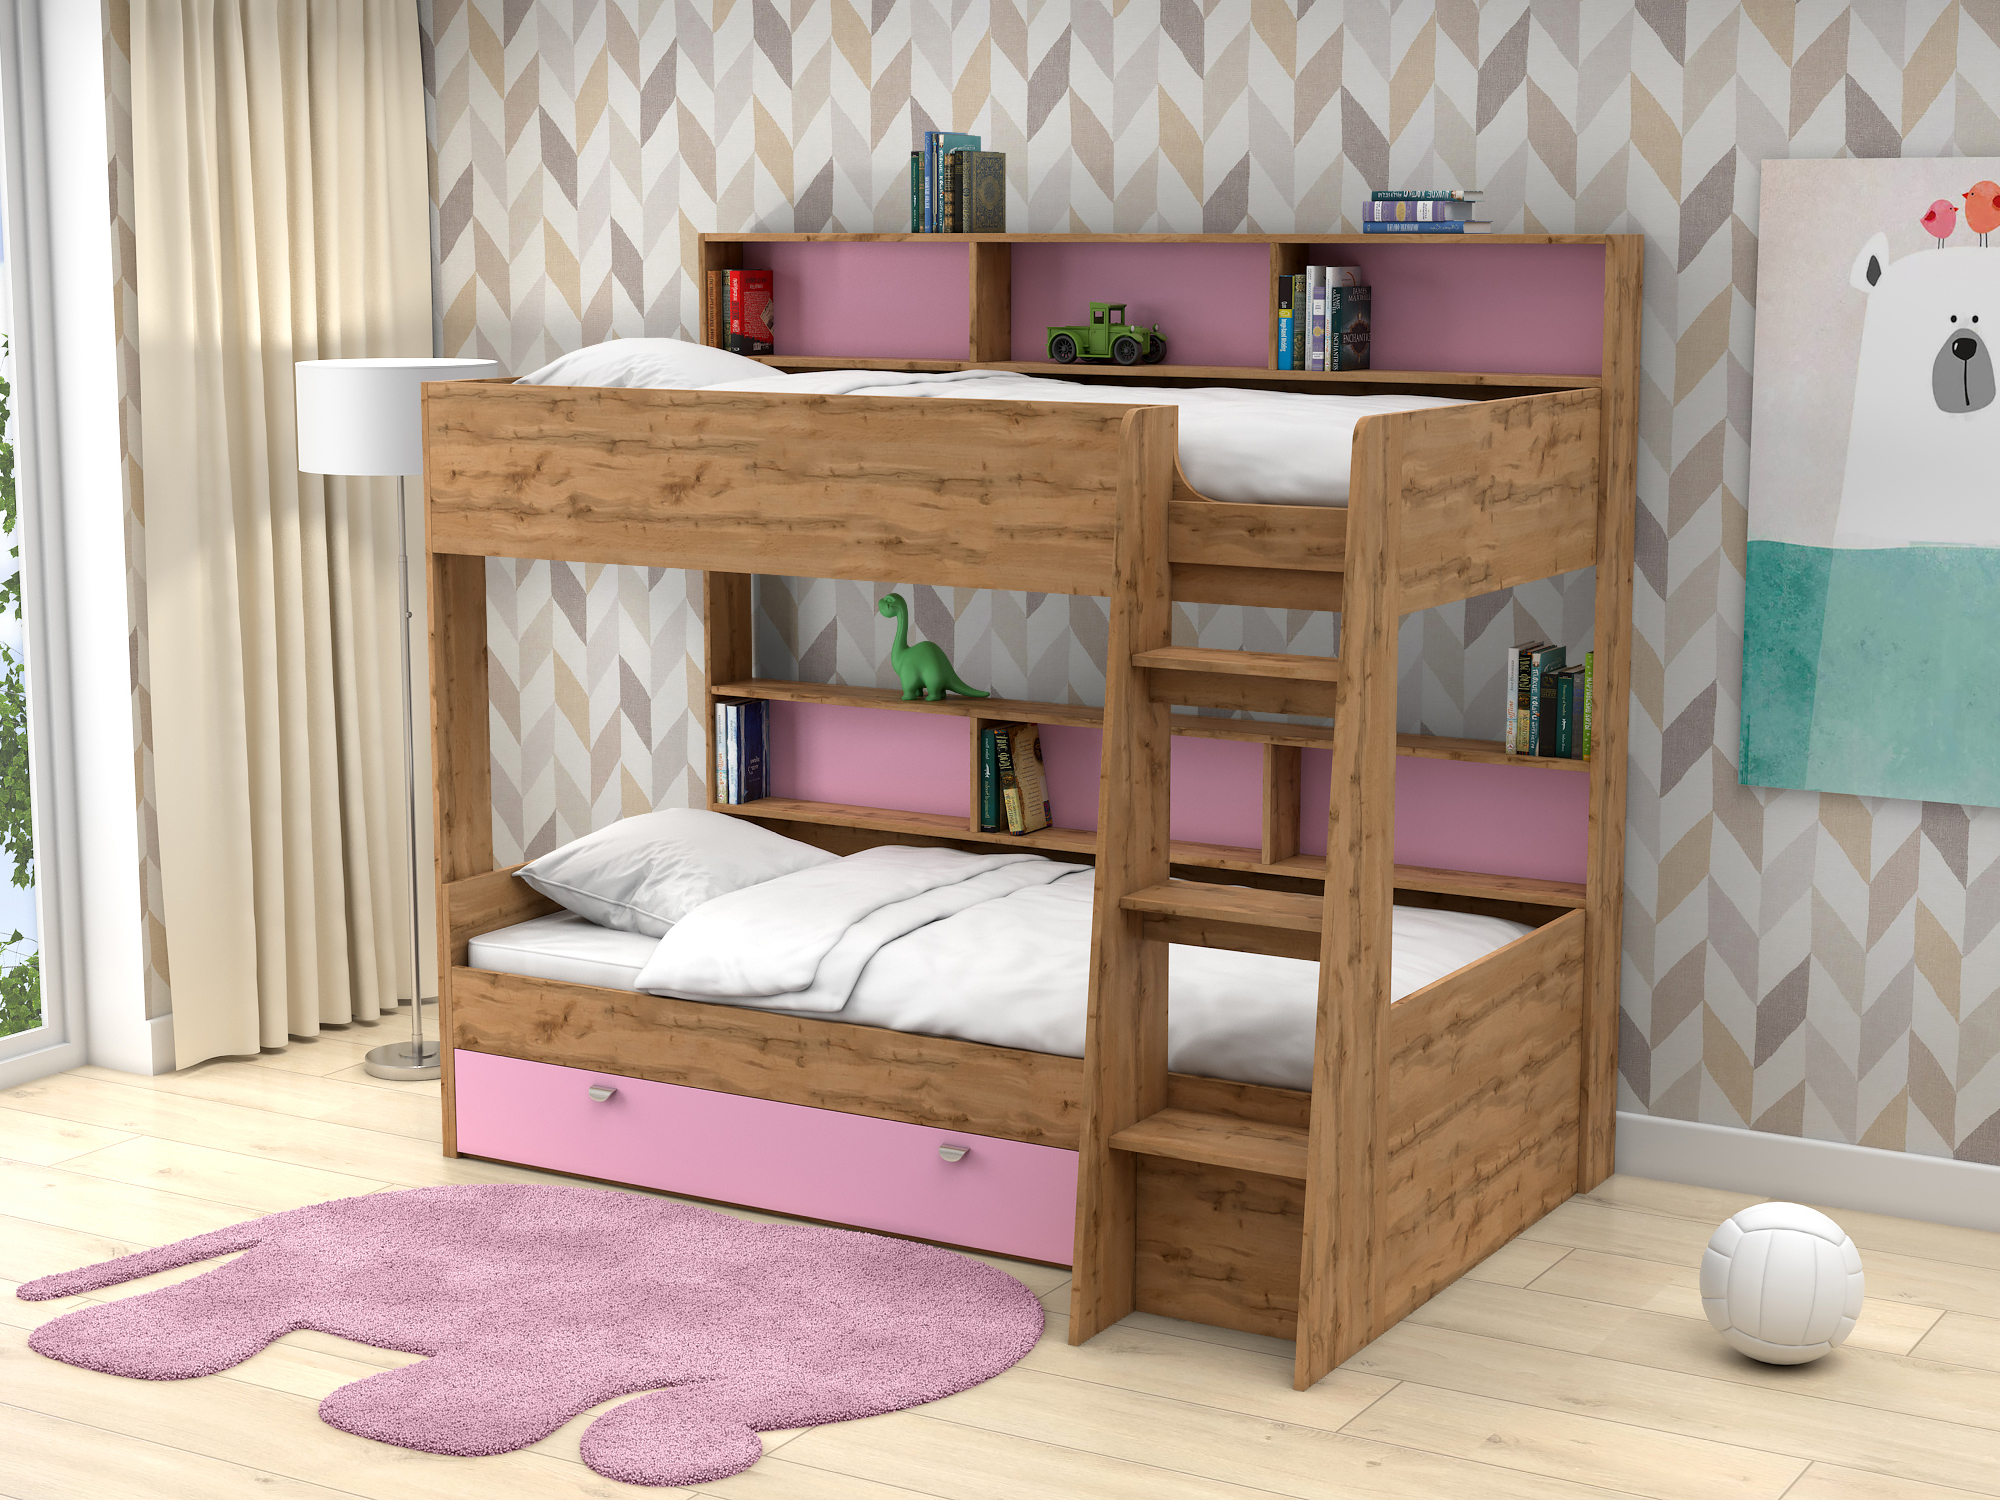 Двухъярусная кровать Golden Kids-1 (90х200) Розовый, Бежевый, ЛДСП кровать двухъярусная ассоль плюс 90х200 ваниль бежевый мдф лдсп